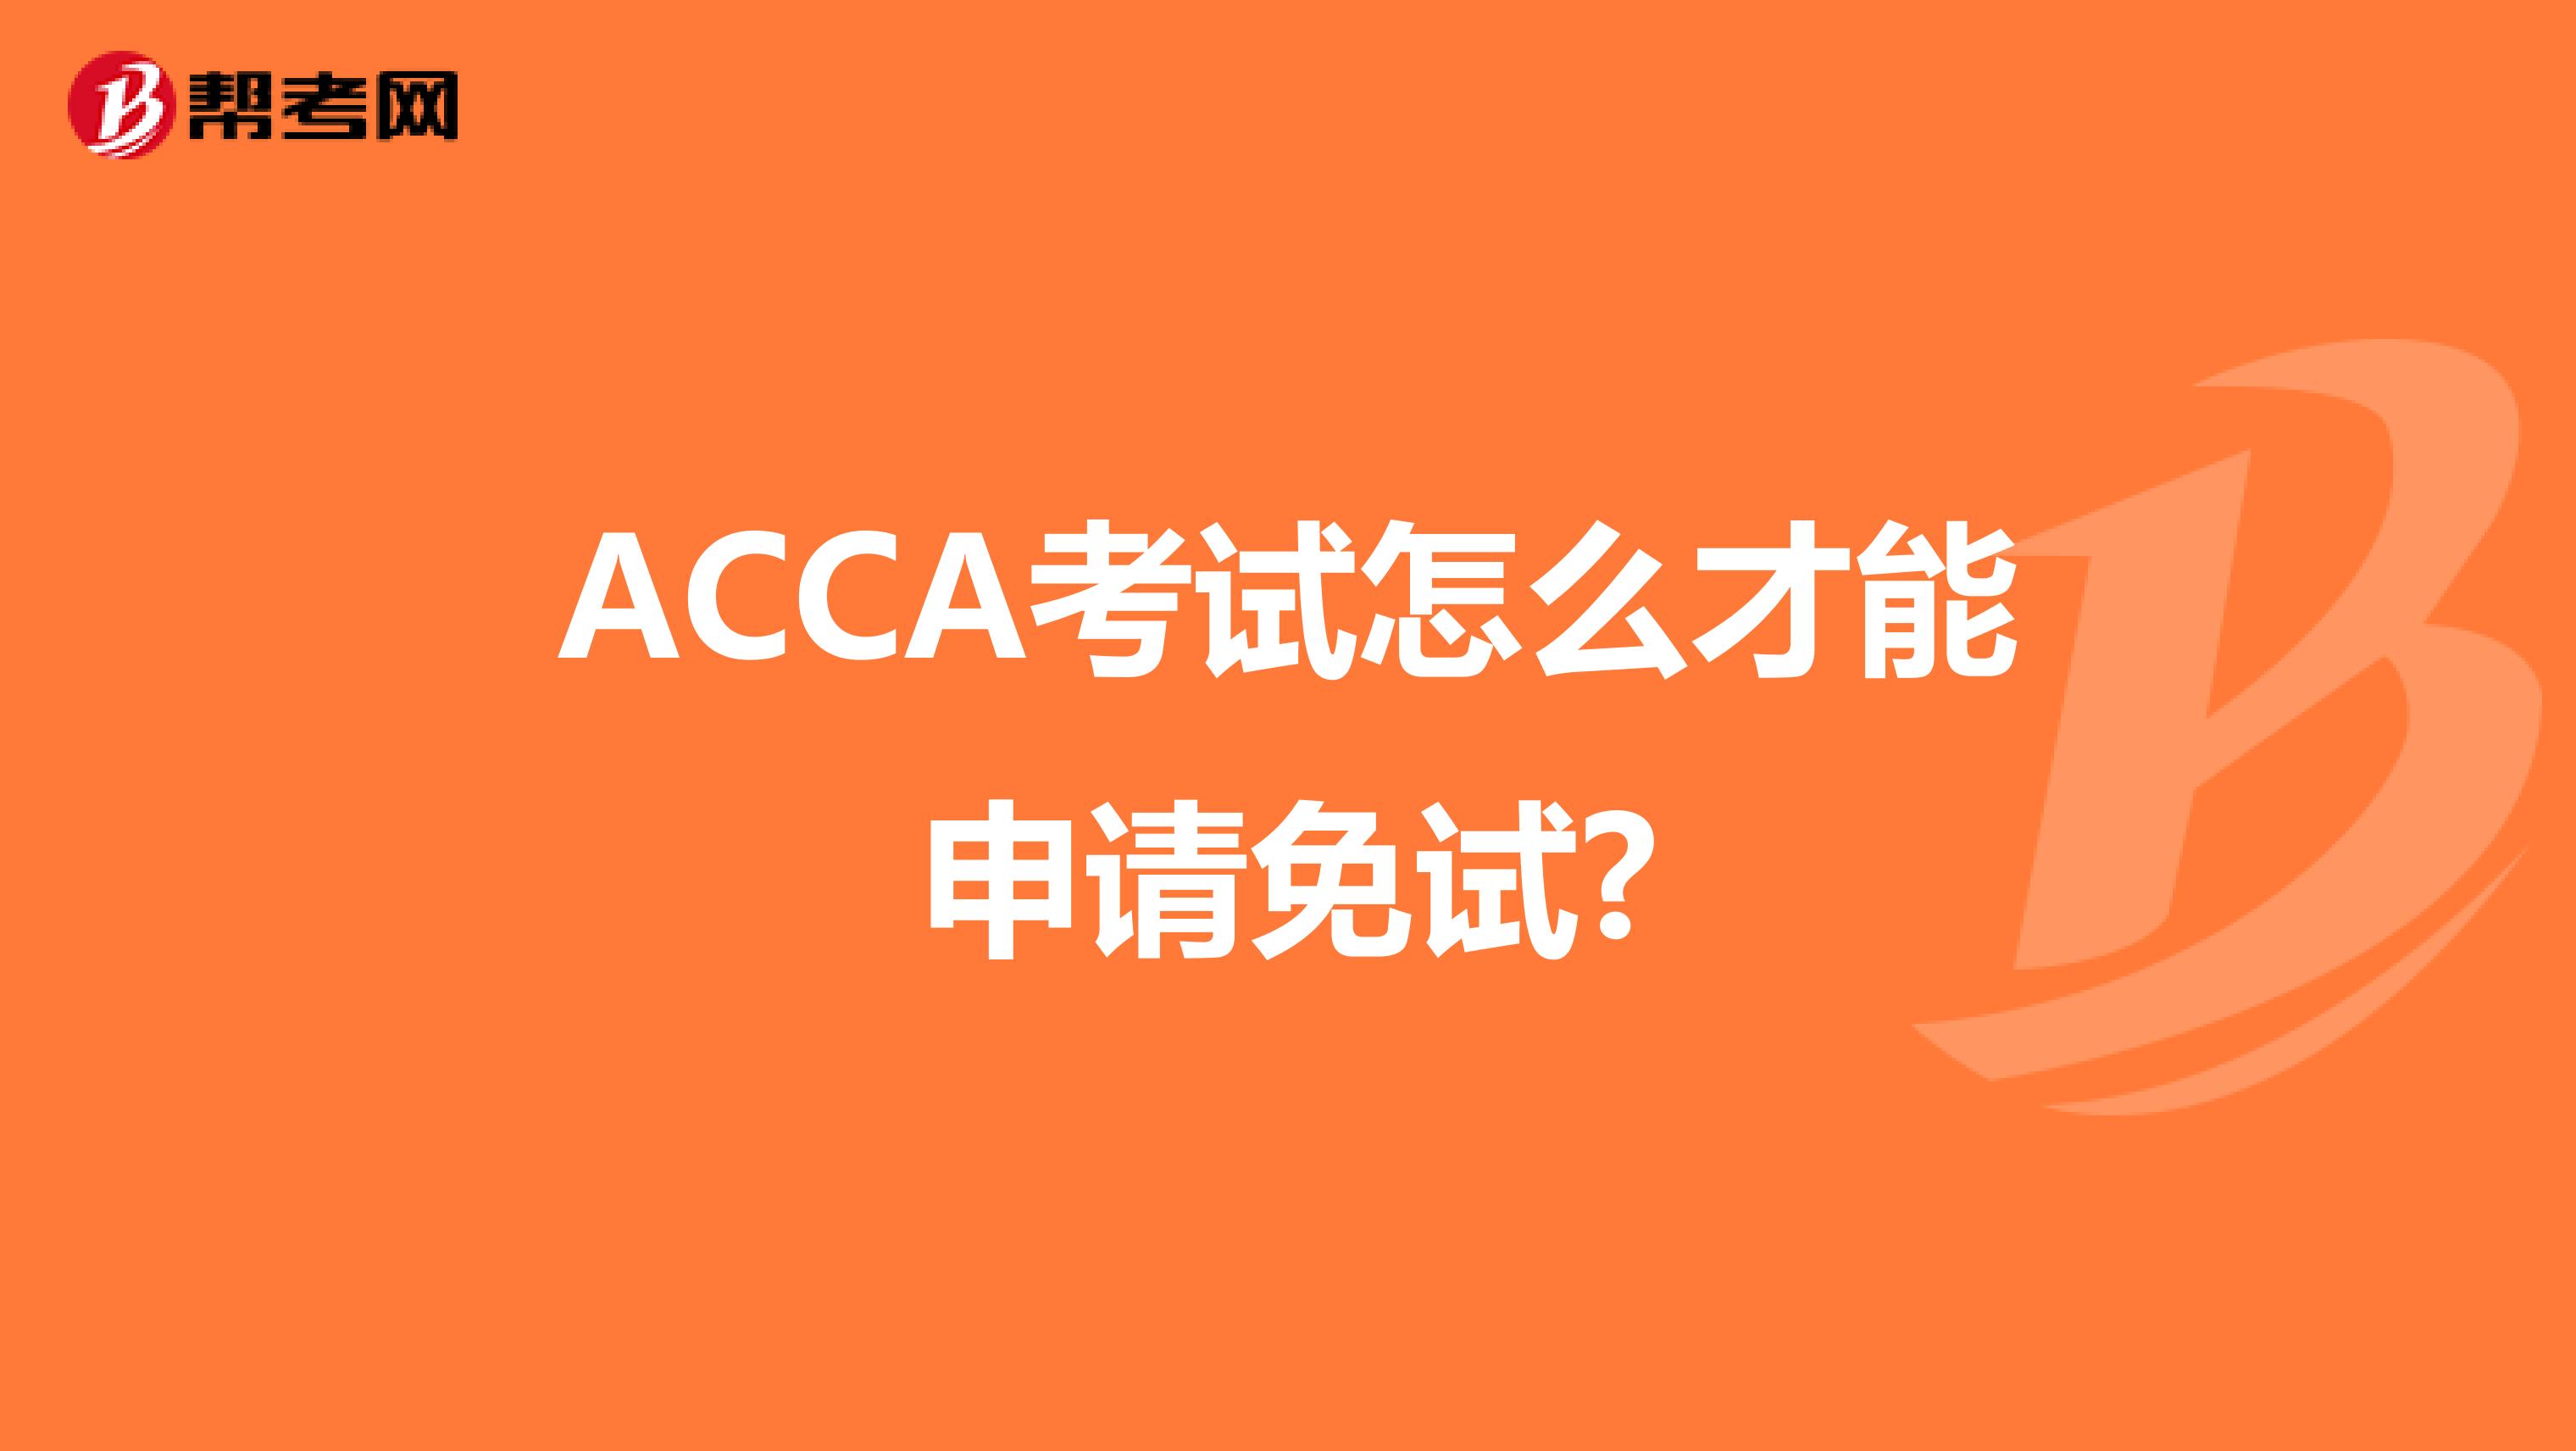 ACCA考试怎么才能申请免试?